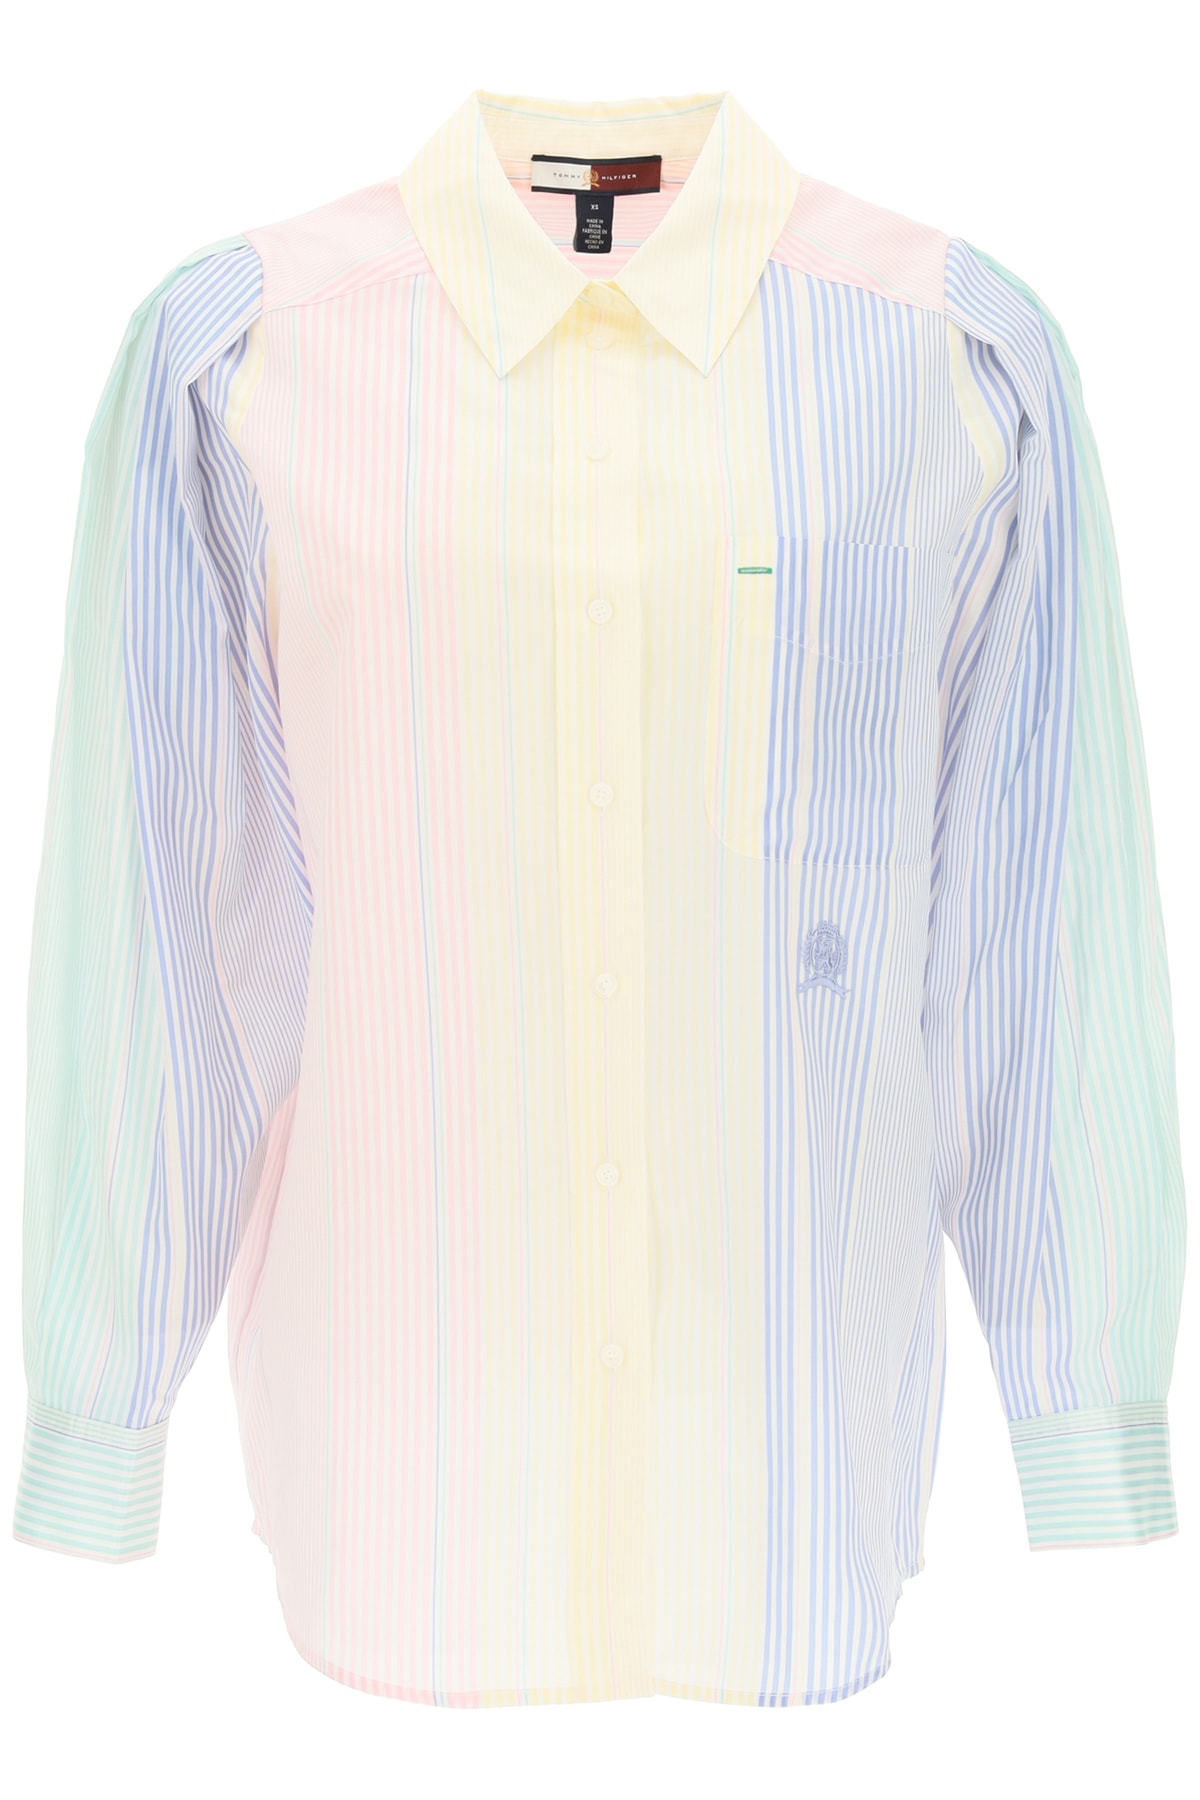 Tommy Hilfiger Multicolor Striped Shirt